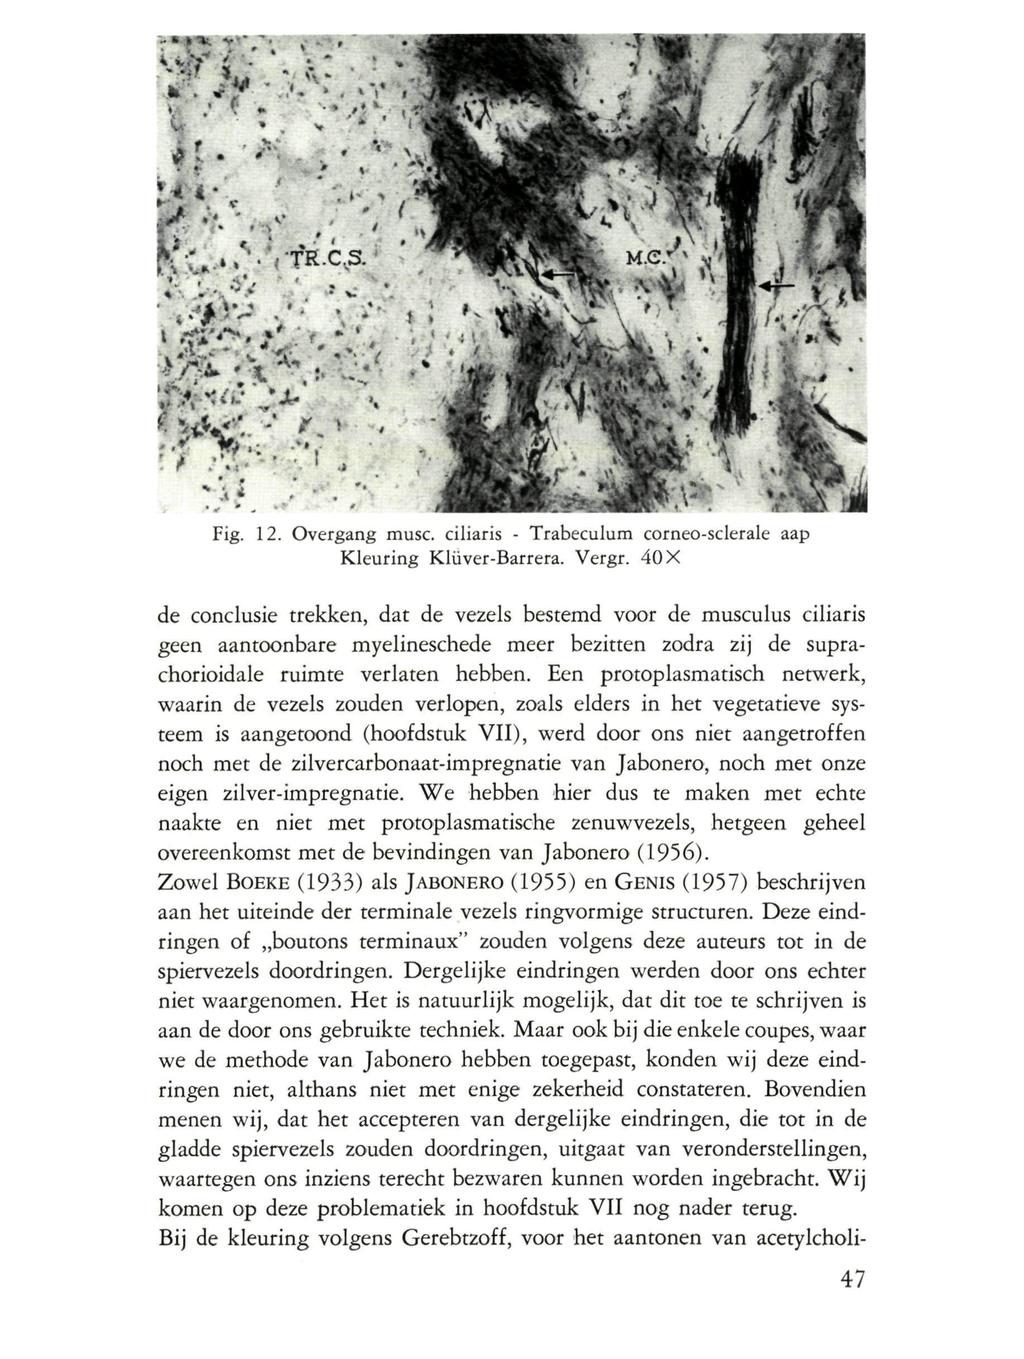 Fig. 12. Overgang musc, ciliaris - Trabeculum corneo-sclerale aap Kleuring Klüver-Barrera. Vergr.